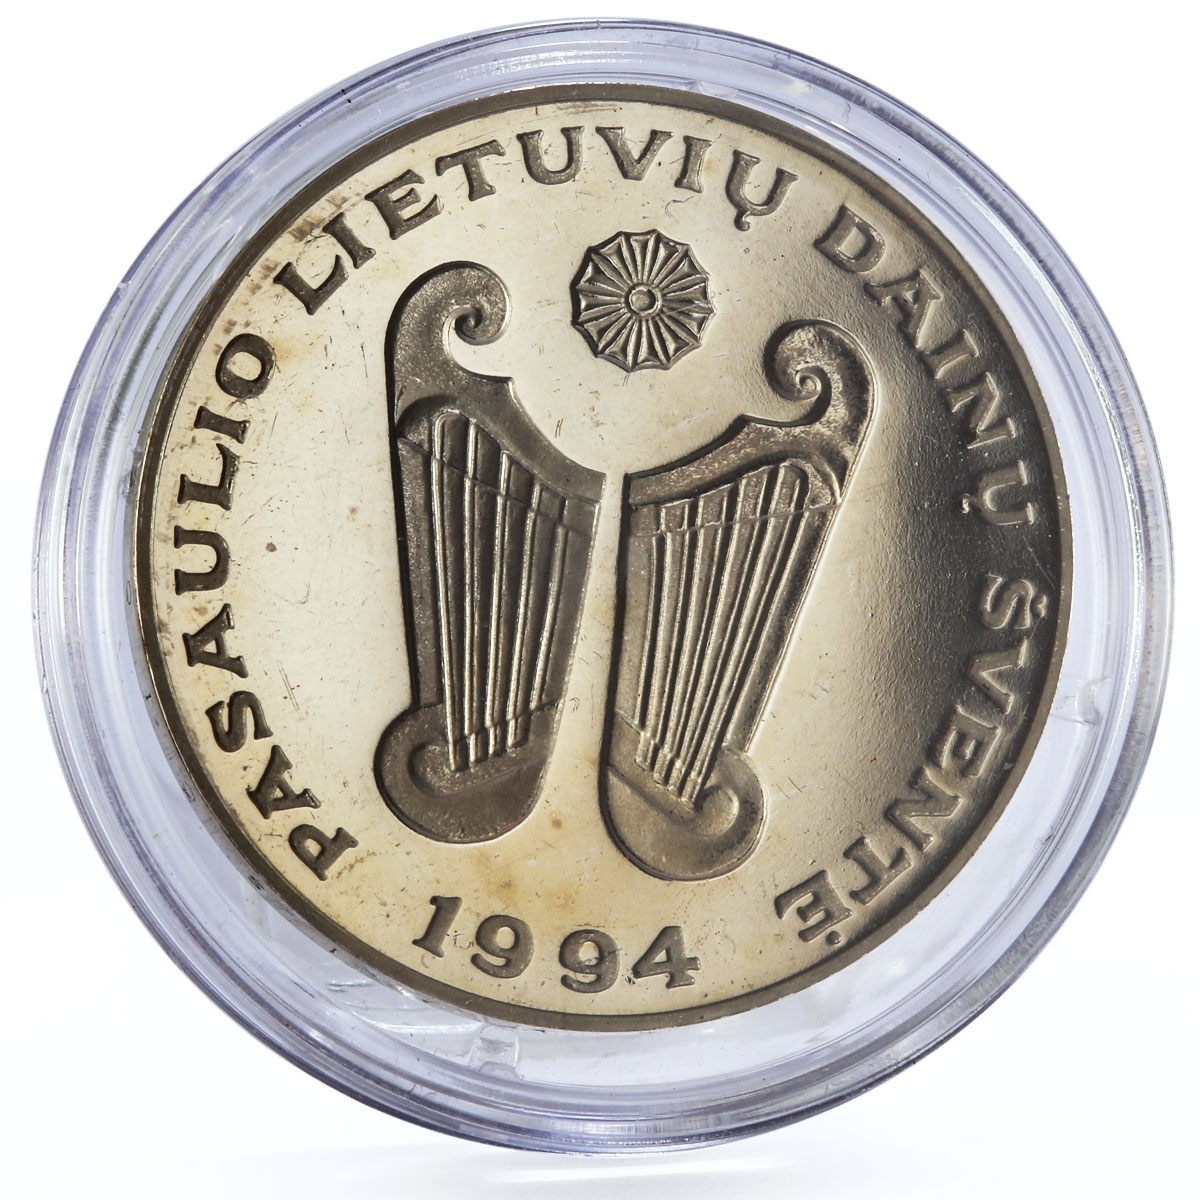 Lithuania 10 litu International Song Festival Kankles Instrument CuNi coin 1994